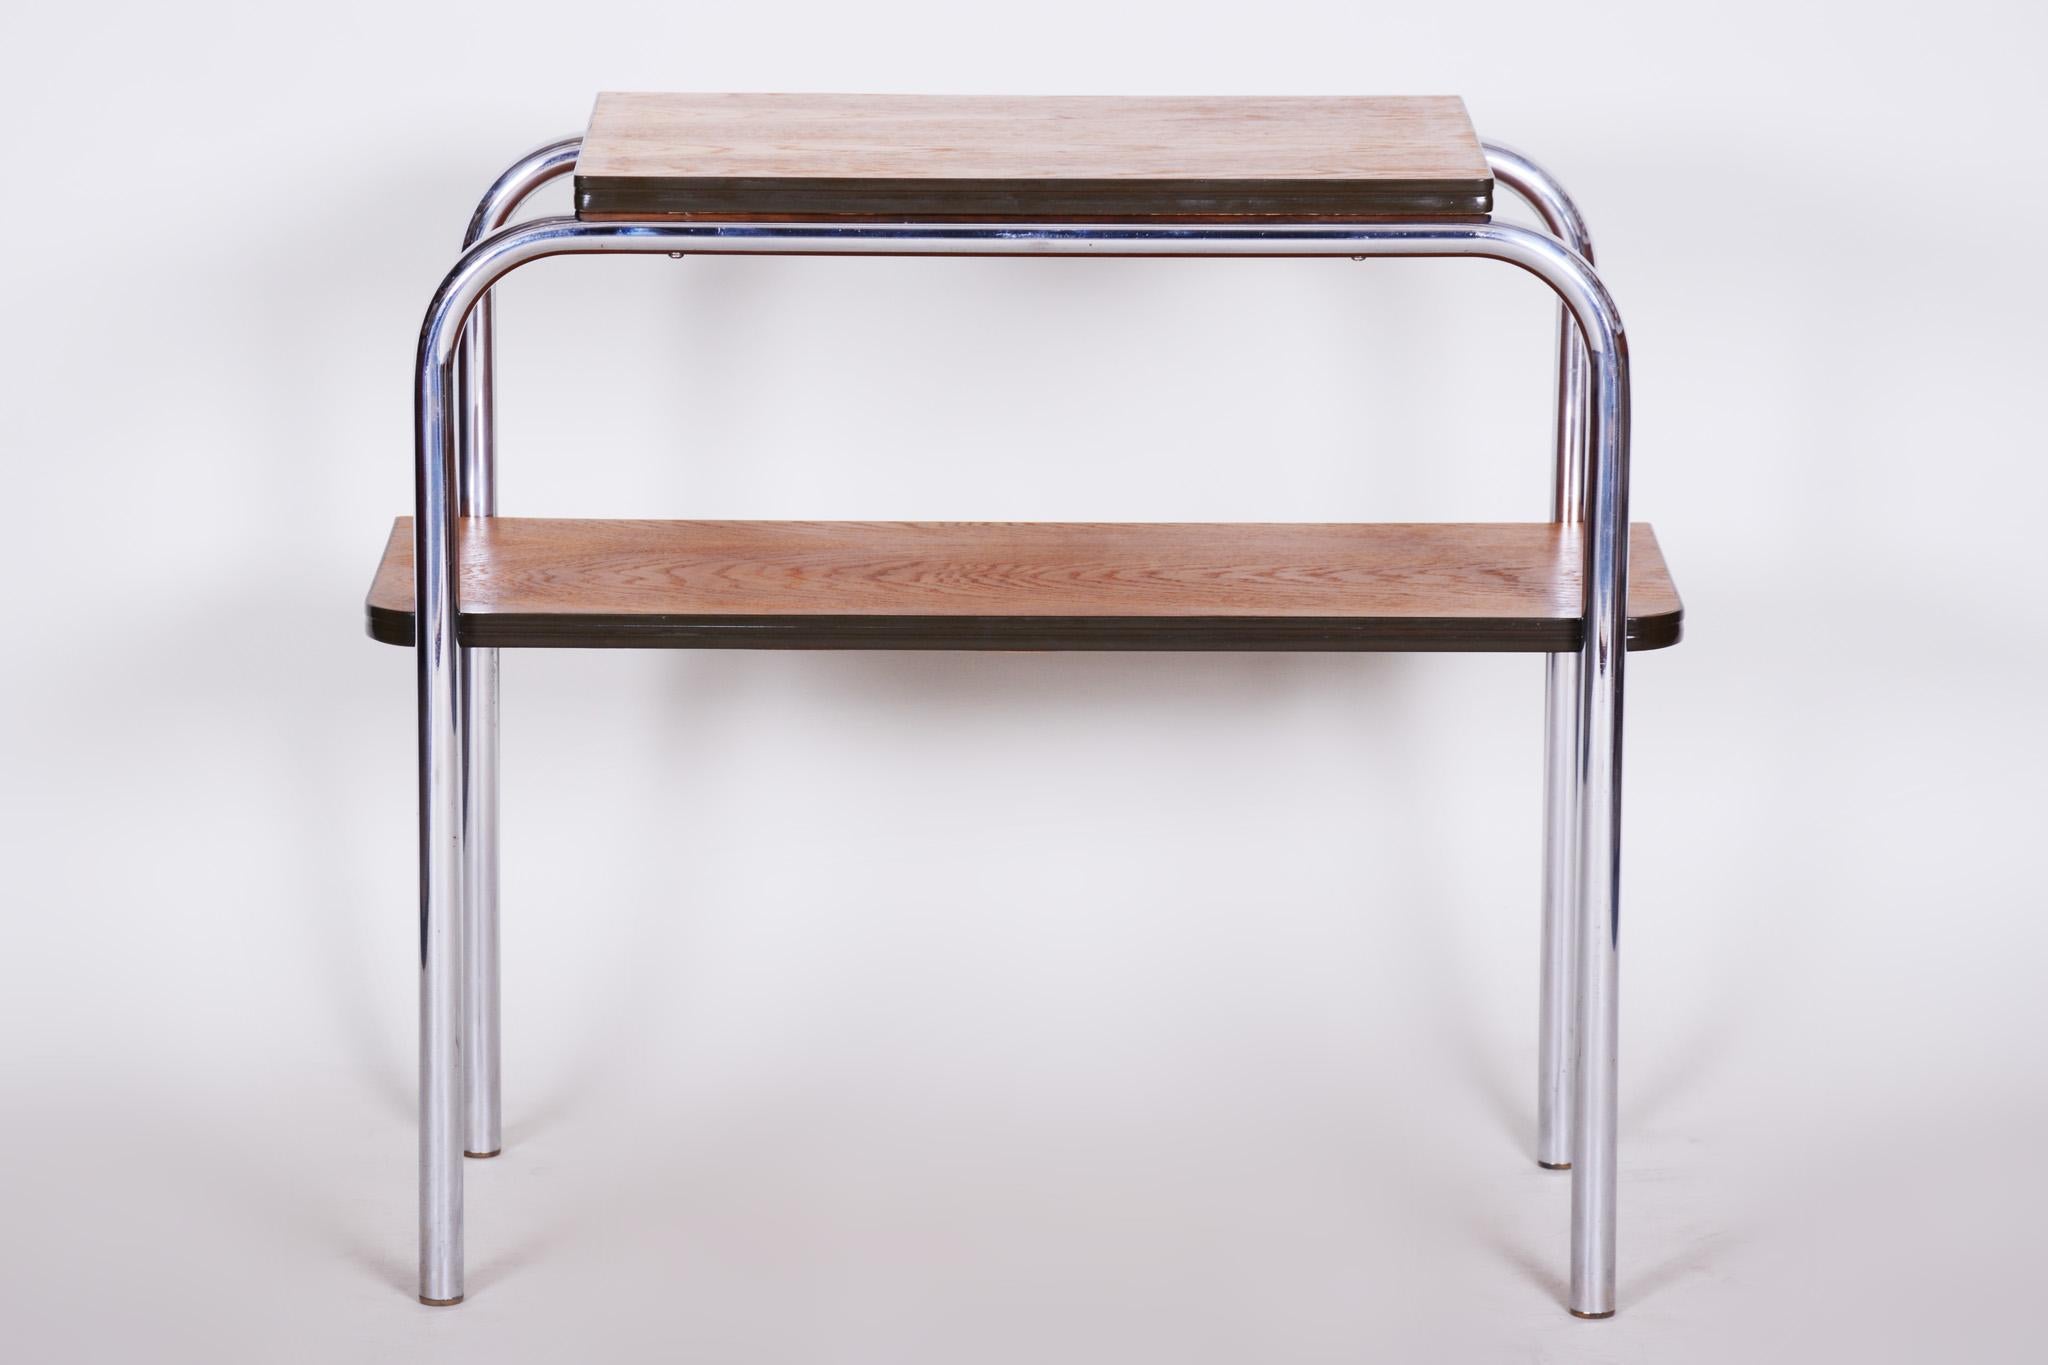 Small Czech chrome Bauhaus table.
Material: Chrome-plated steel and oak
Maker: Hynek Gottwald
Period: 1930-1939
Source: Czechia.